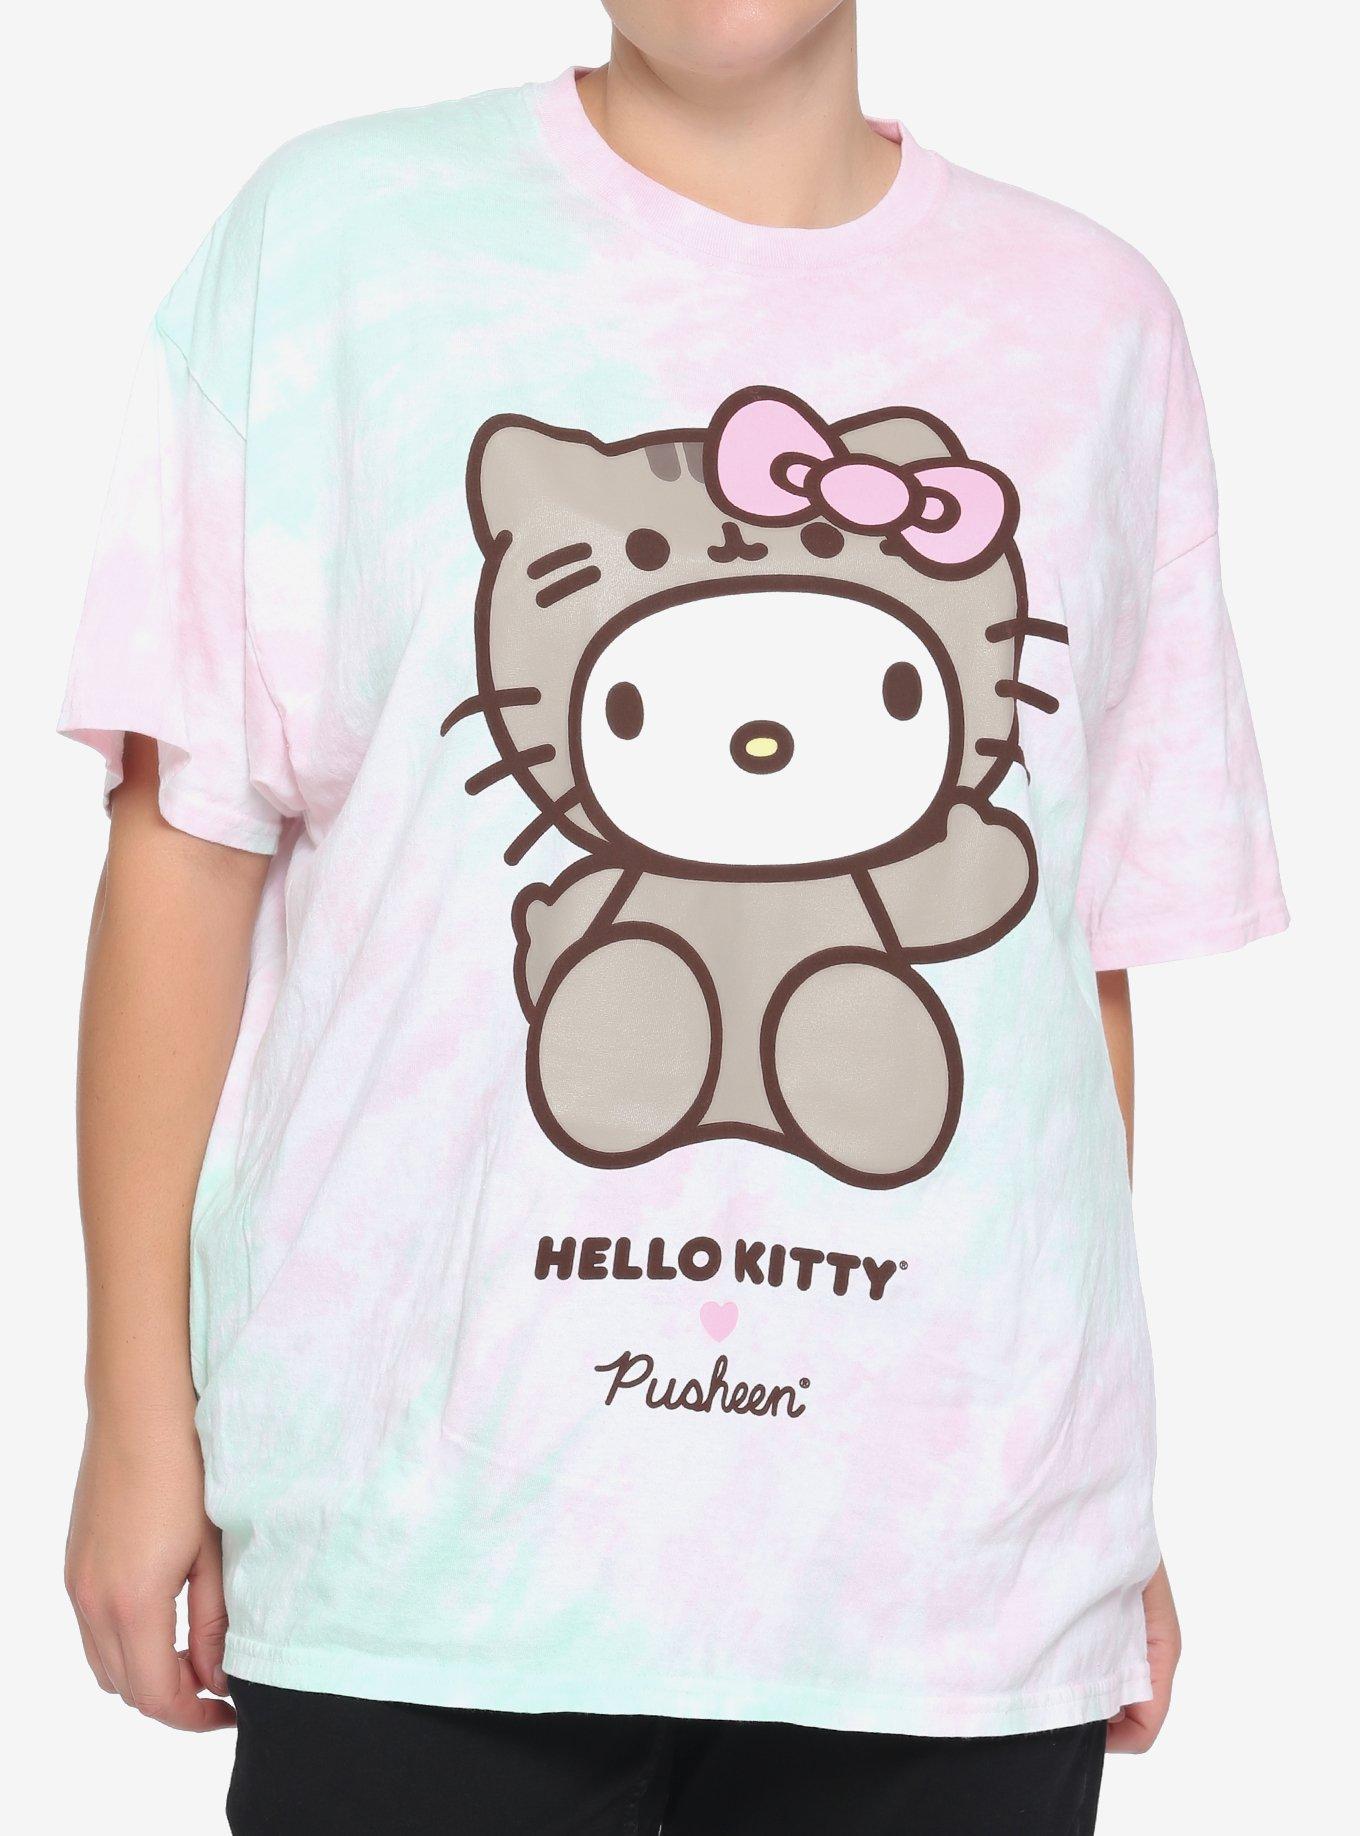 Hello Kitty X Pusheen Tie-Dye Boyfriend Fit Girls T-Shirt Plus Size, MULTI, hi-res